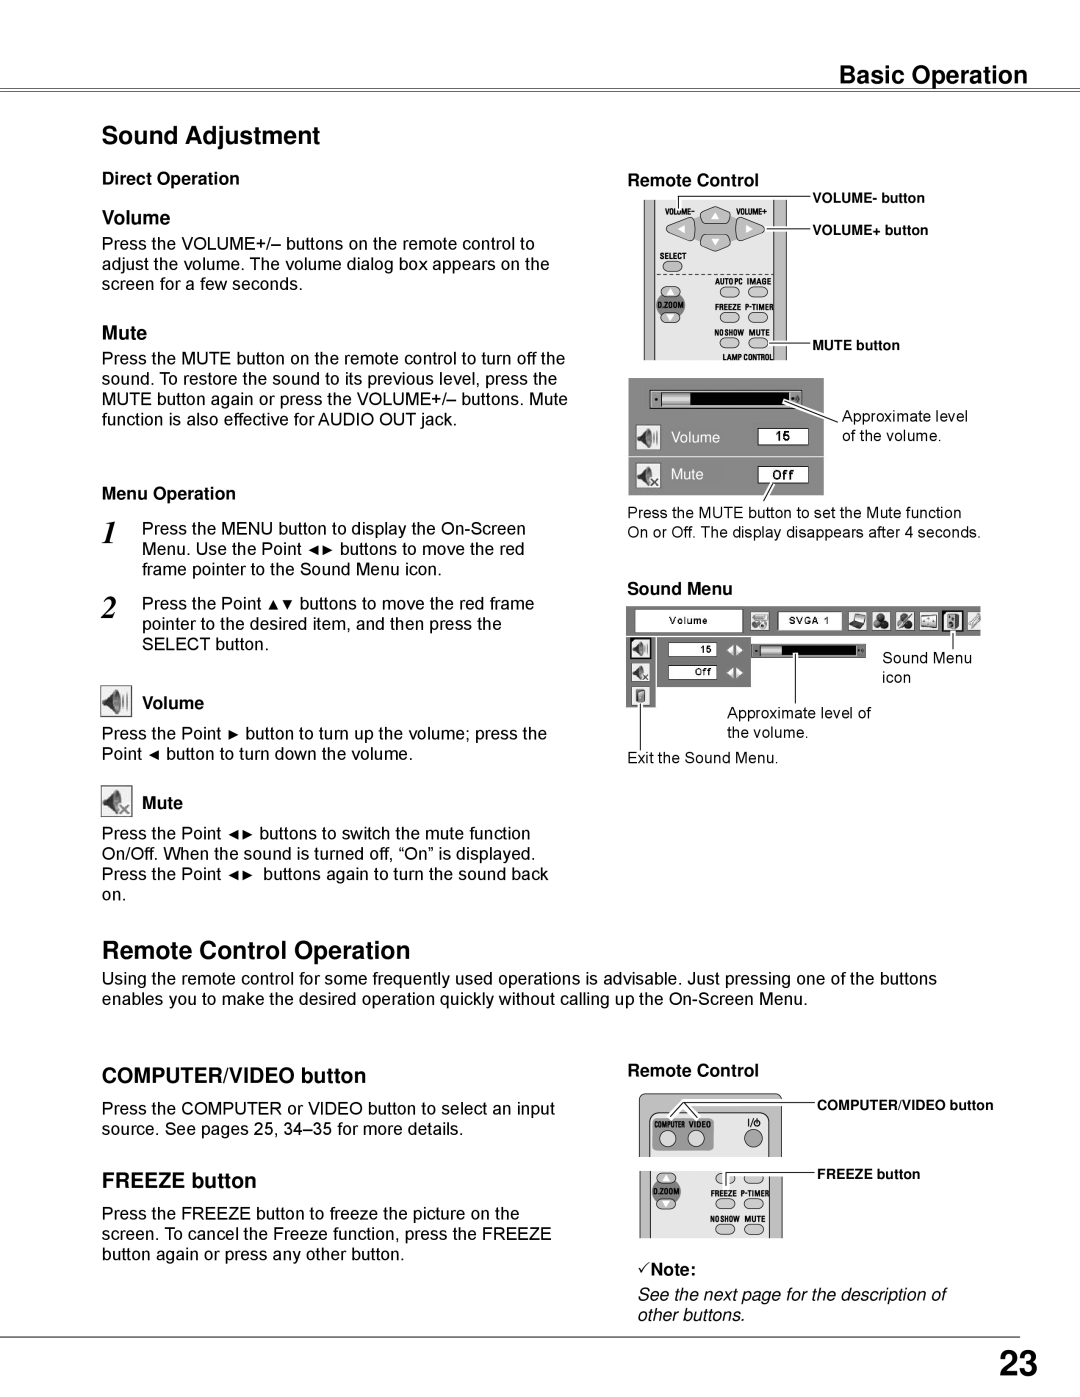 Sanyo PLC-WXE45 Sound Adjustment, Remote Control Operation, COMPUTER/VIDEO button, FREEZE button, Basic Operation, Volume 